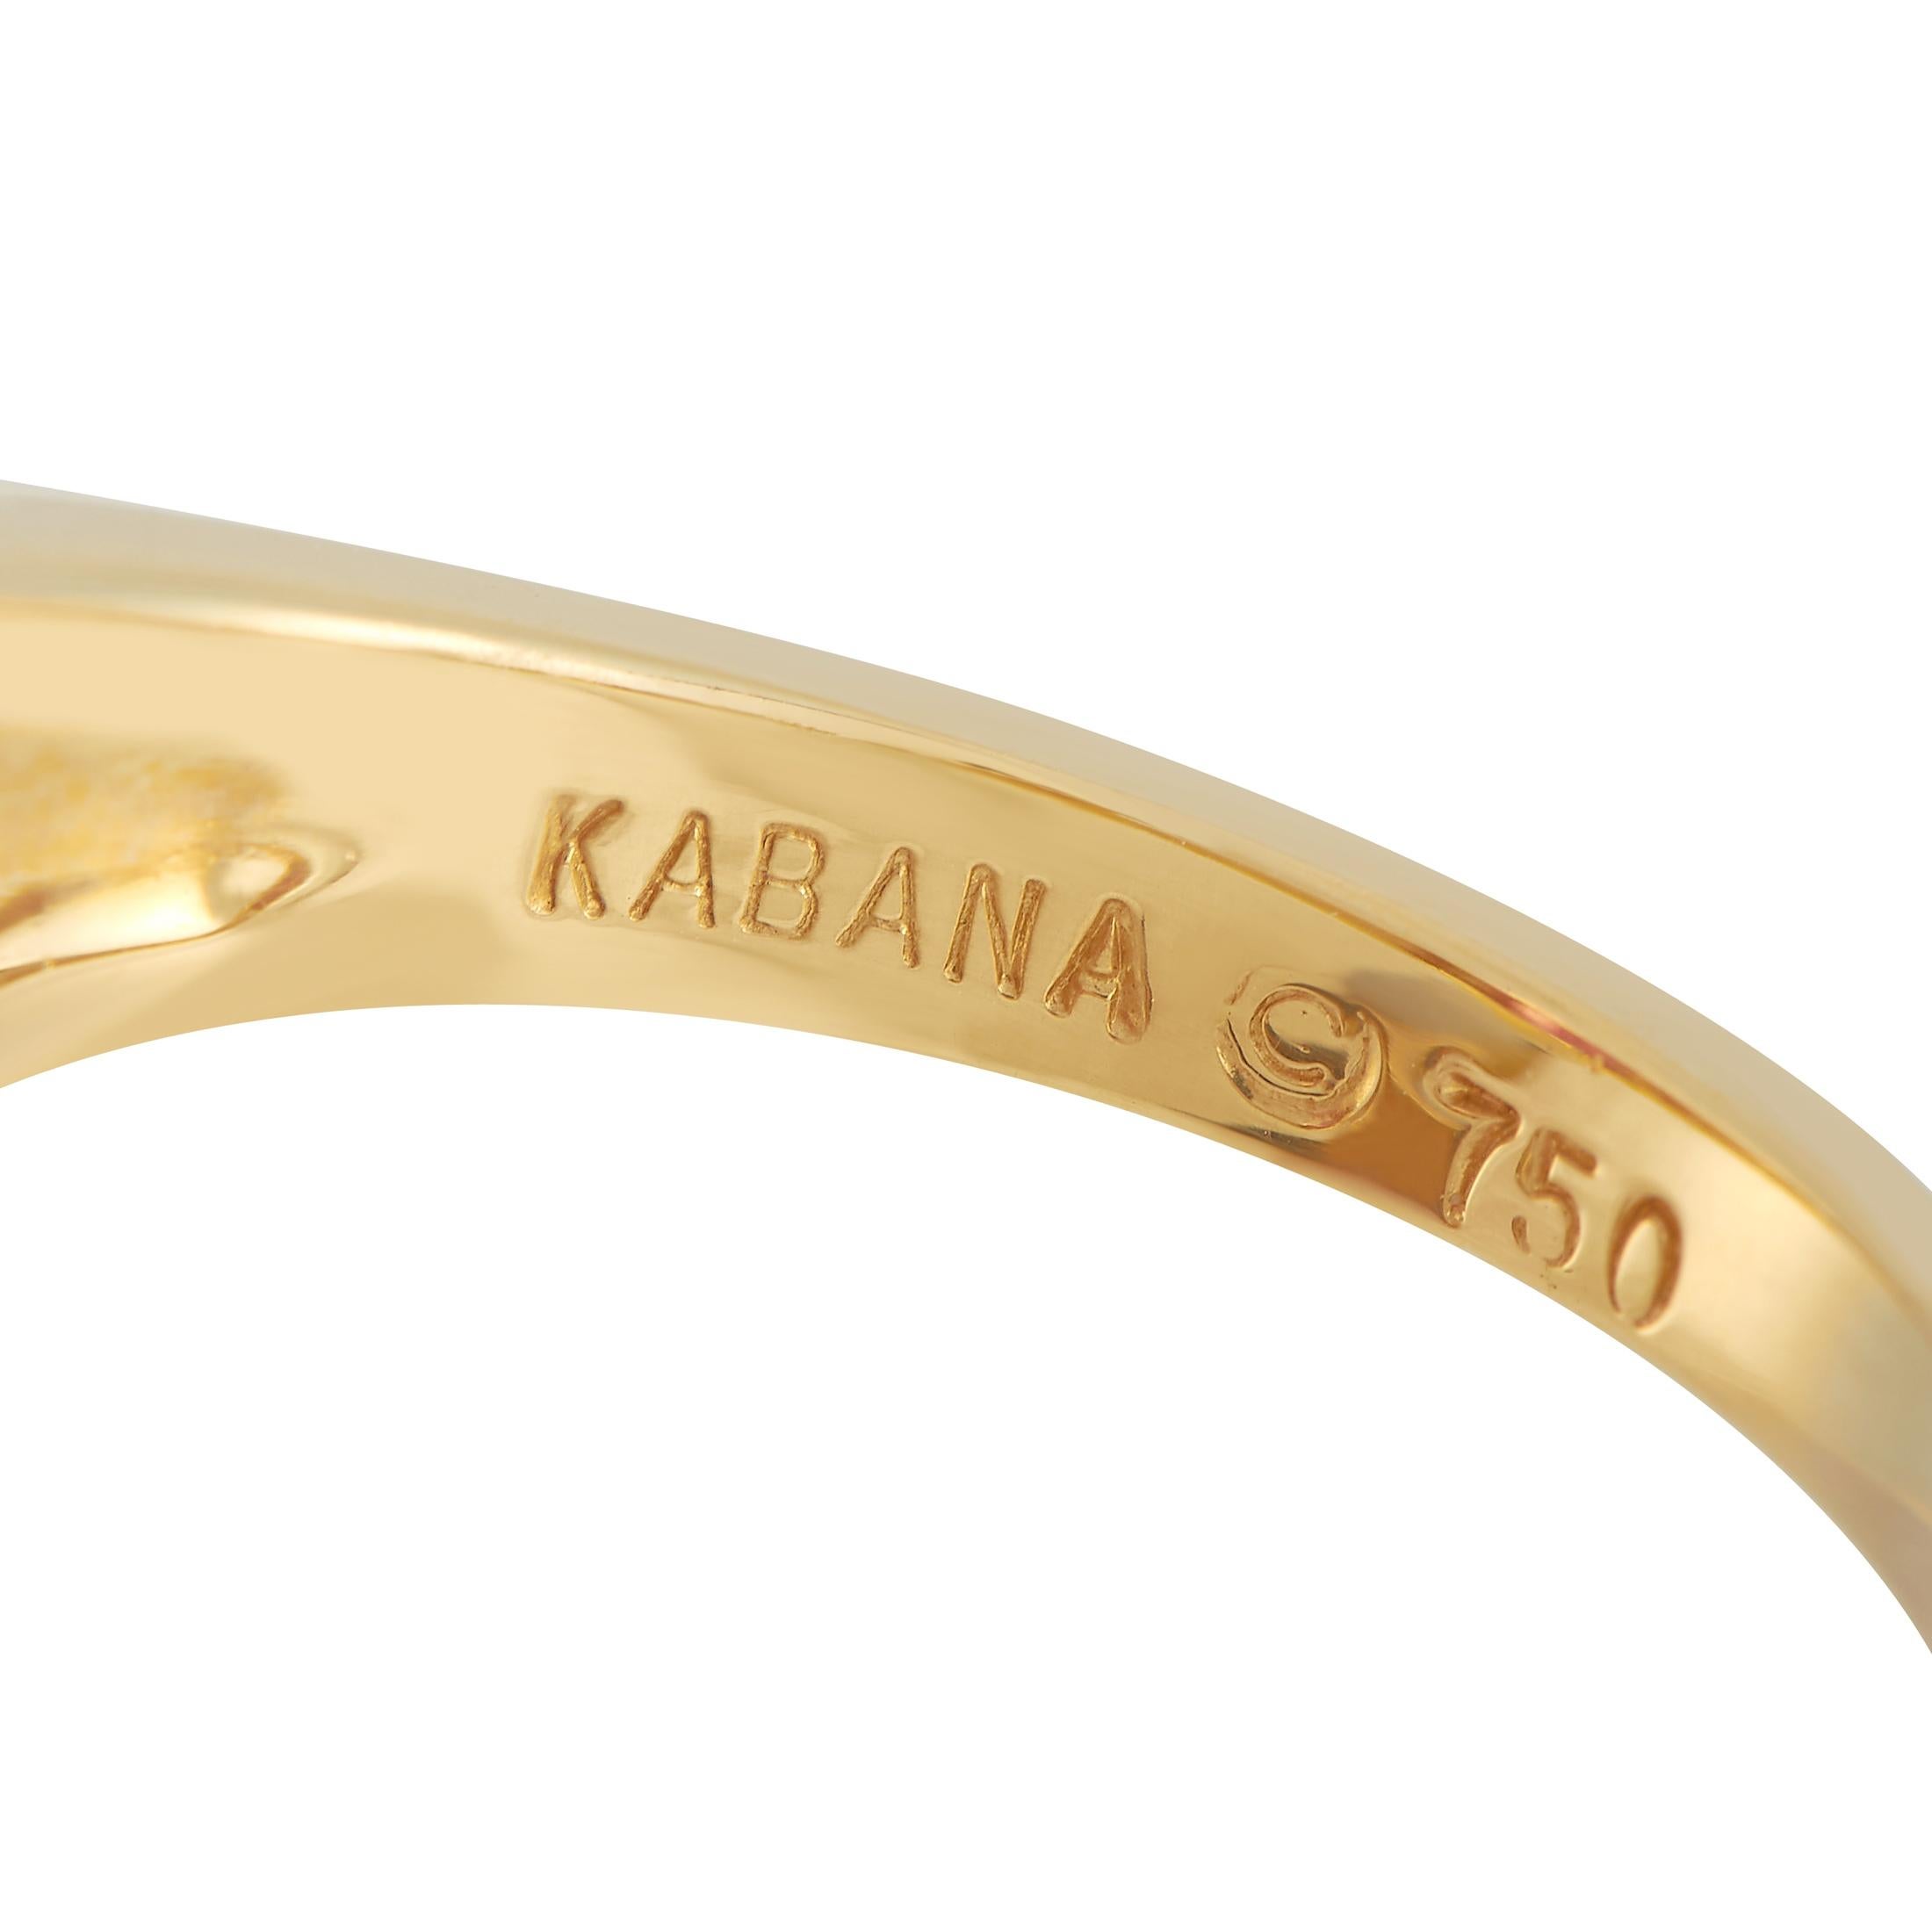 kabana rings